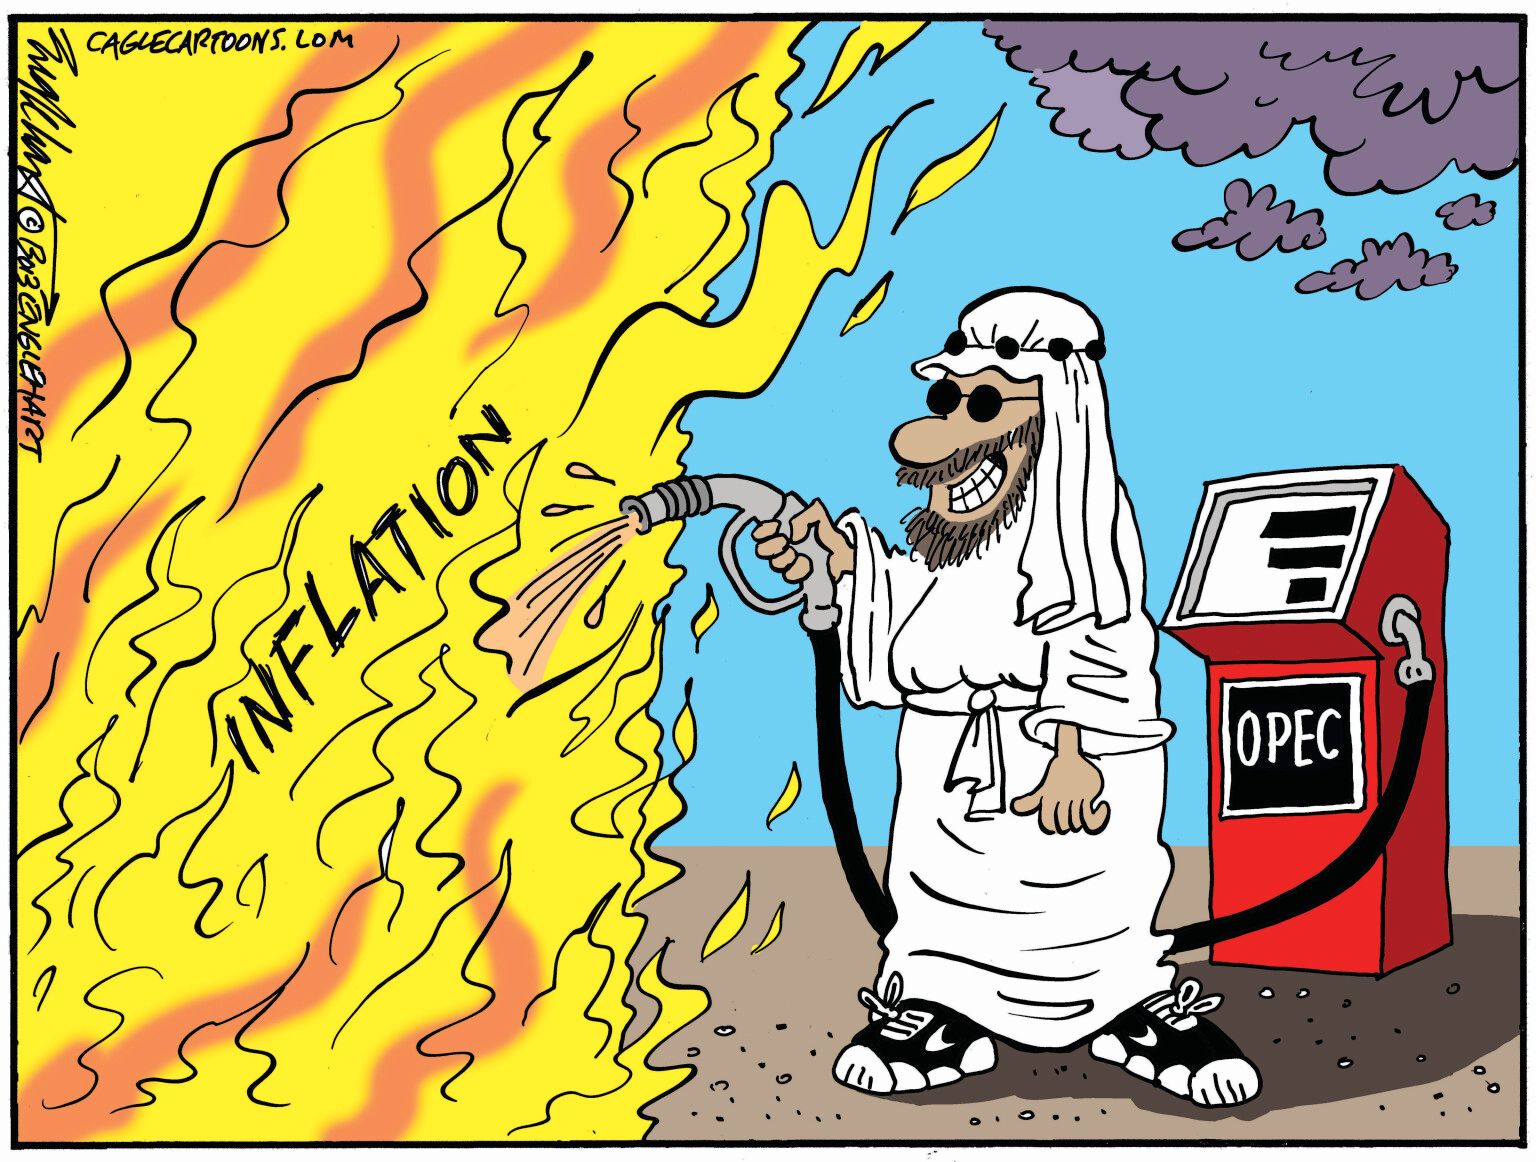 OPEC Feeds Inflation - newsjustin.press editorial political cartoon